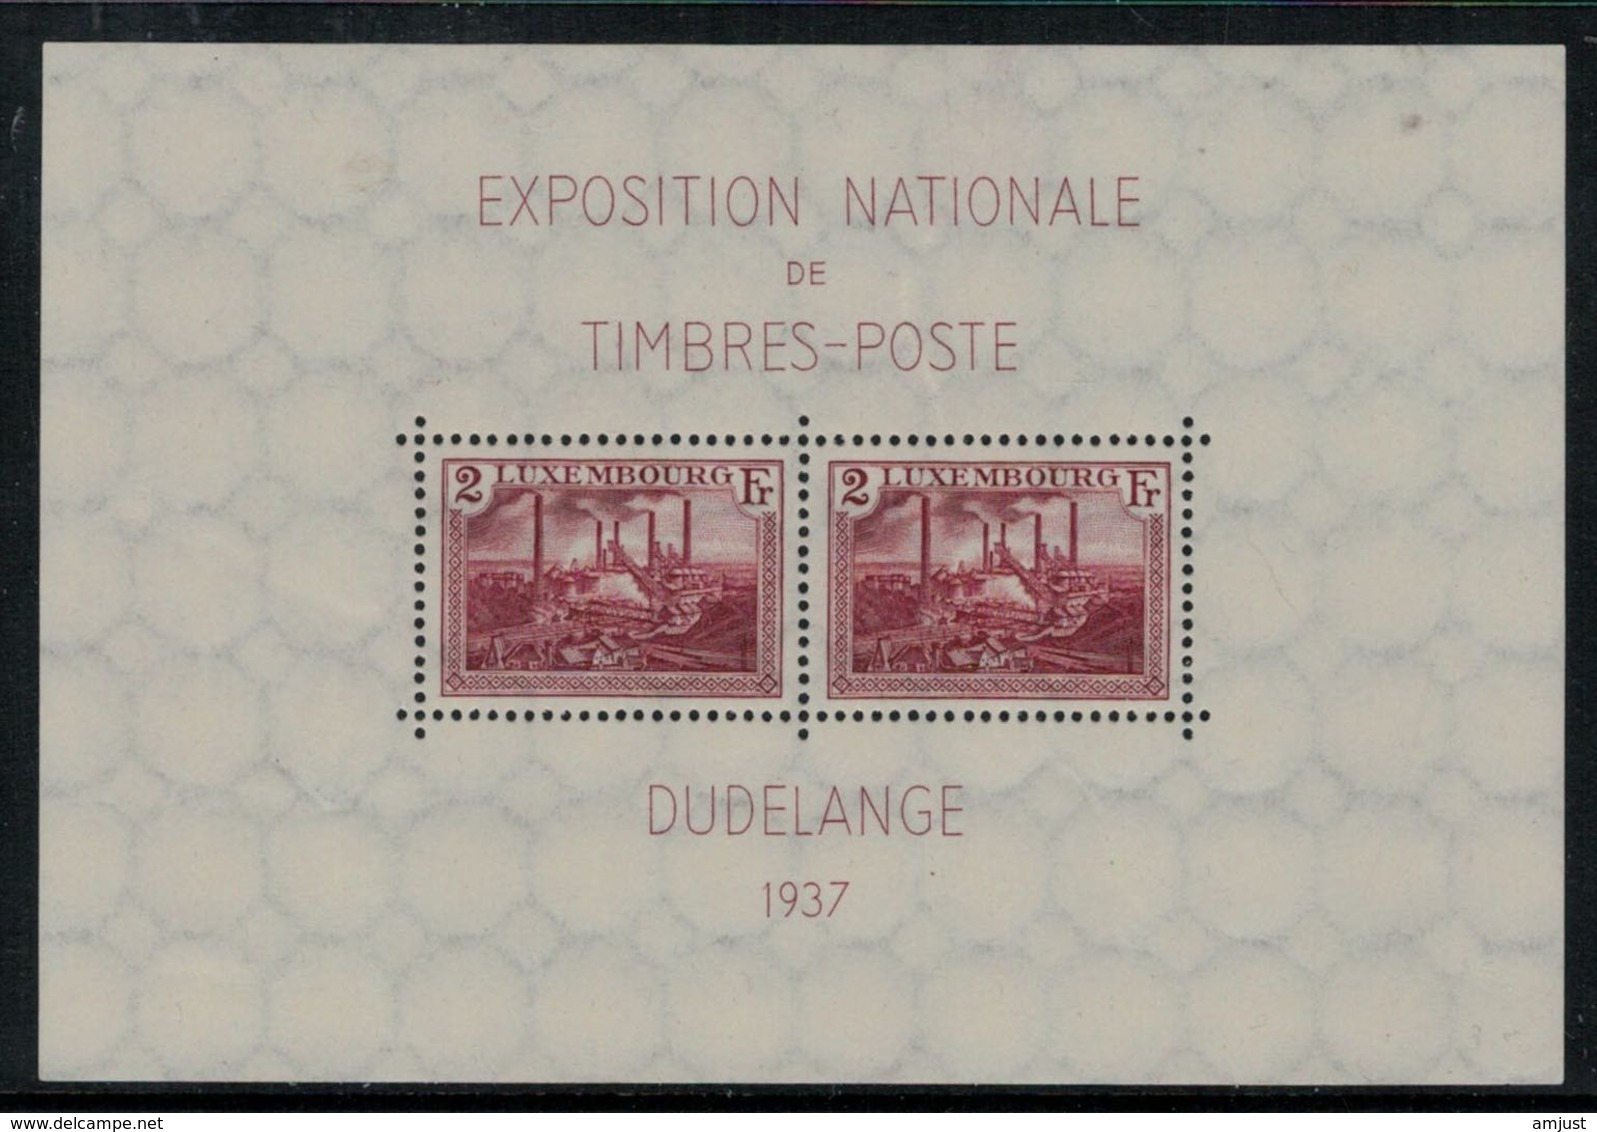 Luxembourg // Bloc Feuillet Neuf ** 1937 Exposition Nationale Dudelange - Blocs & Feuillets